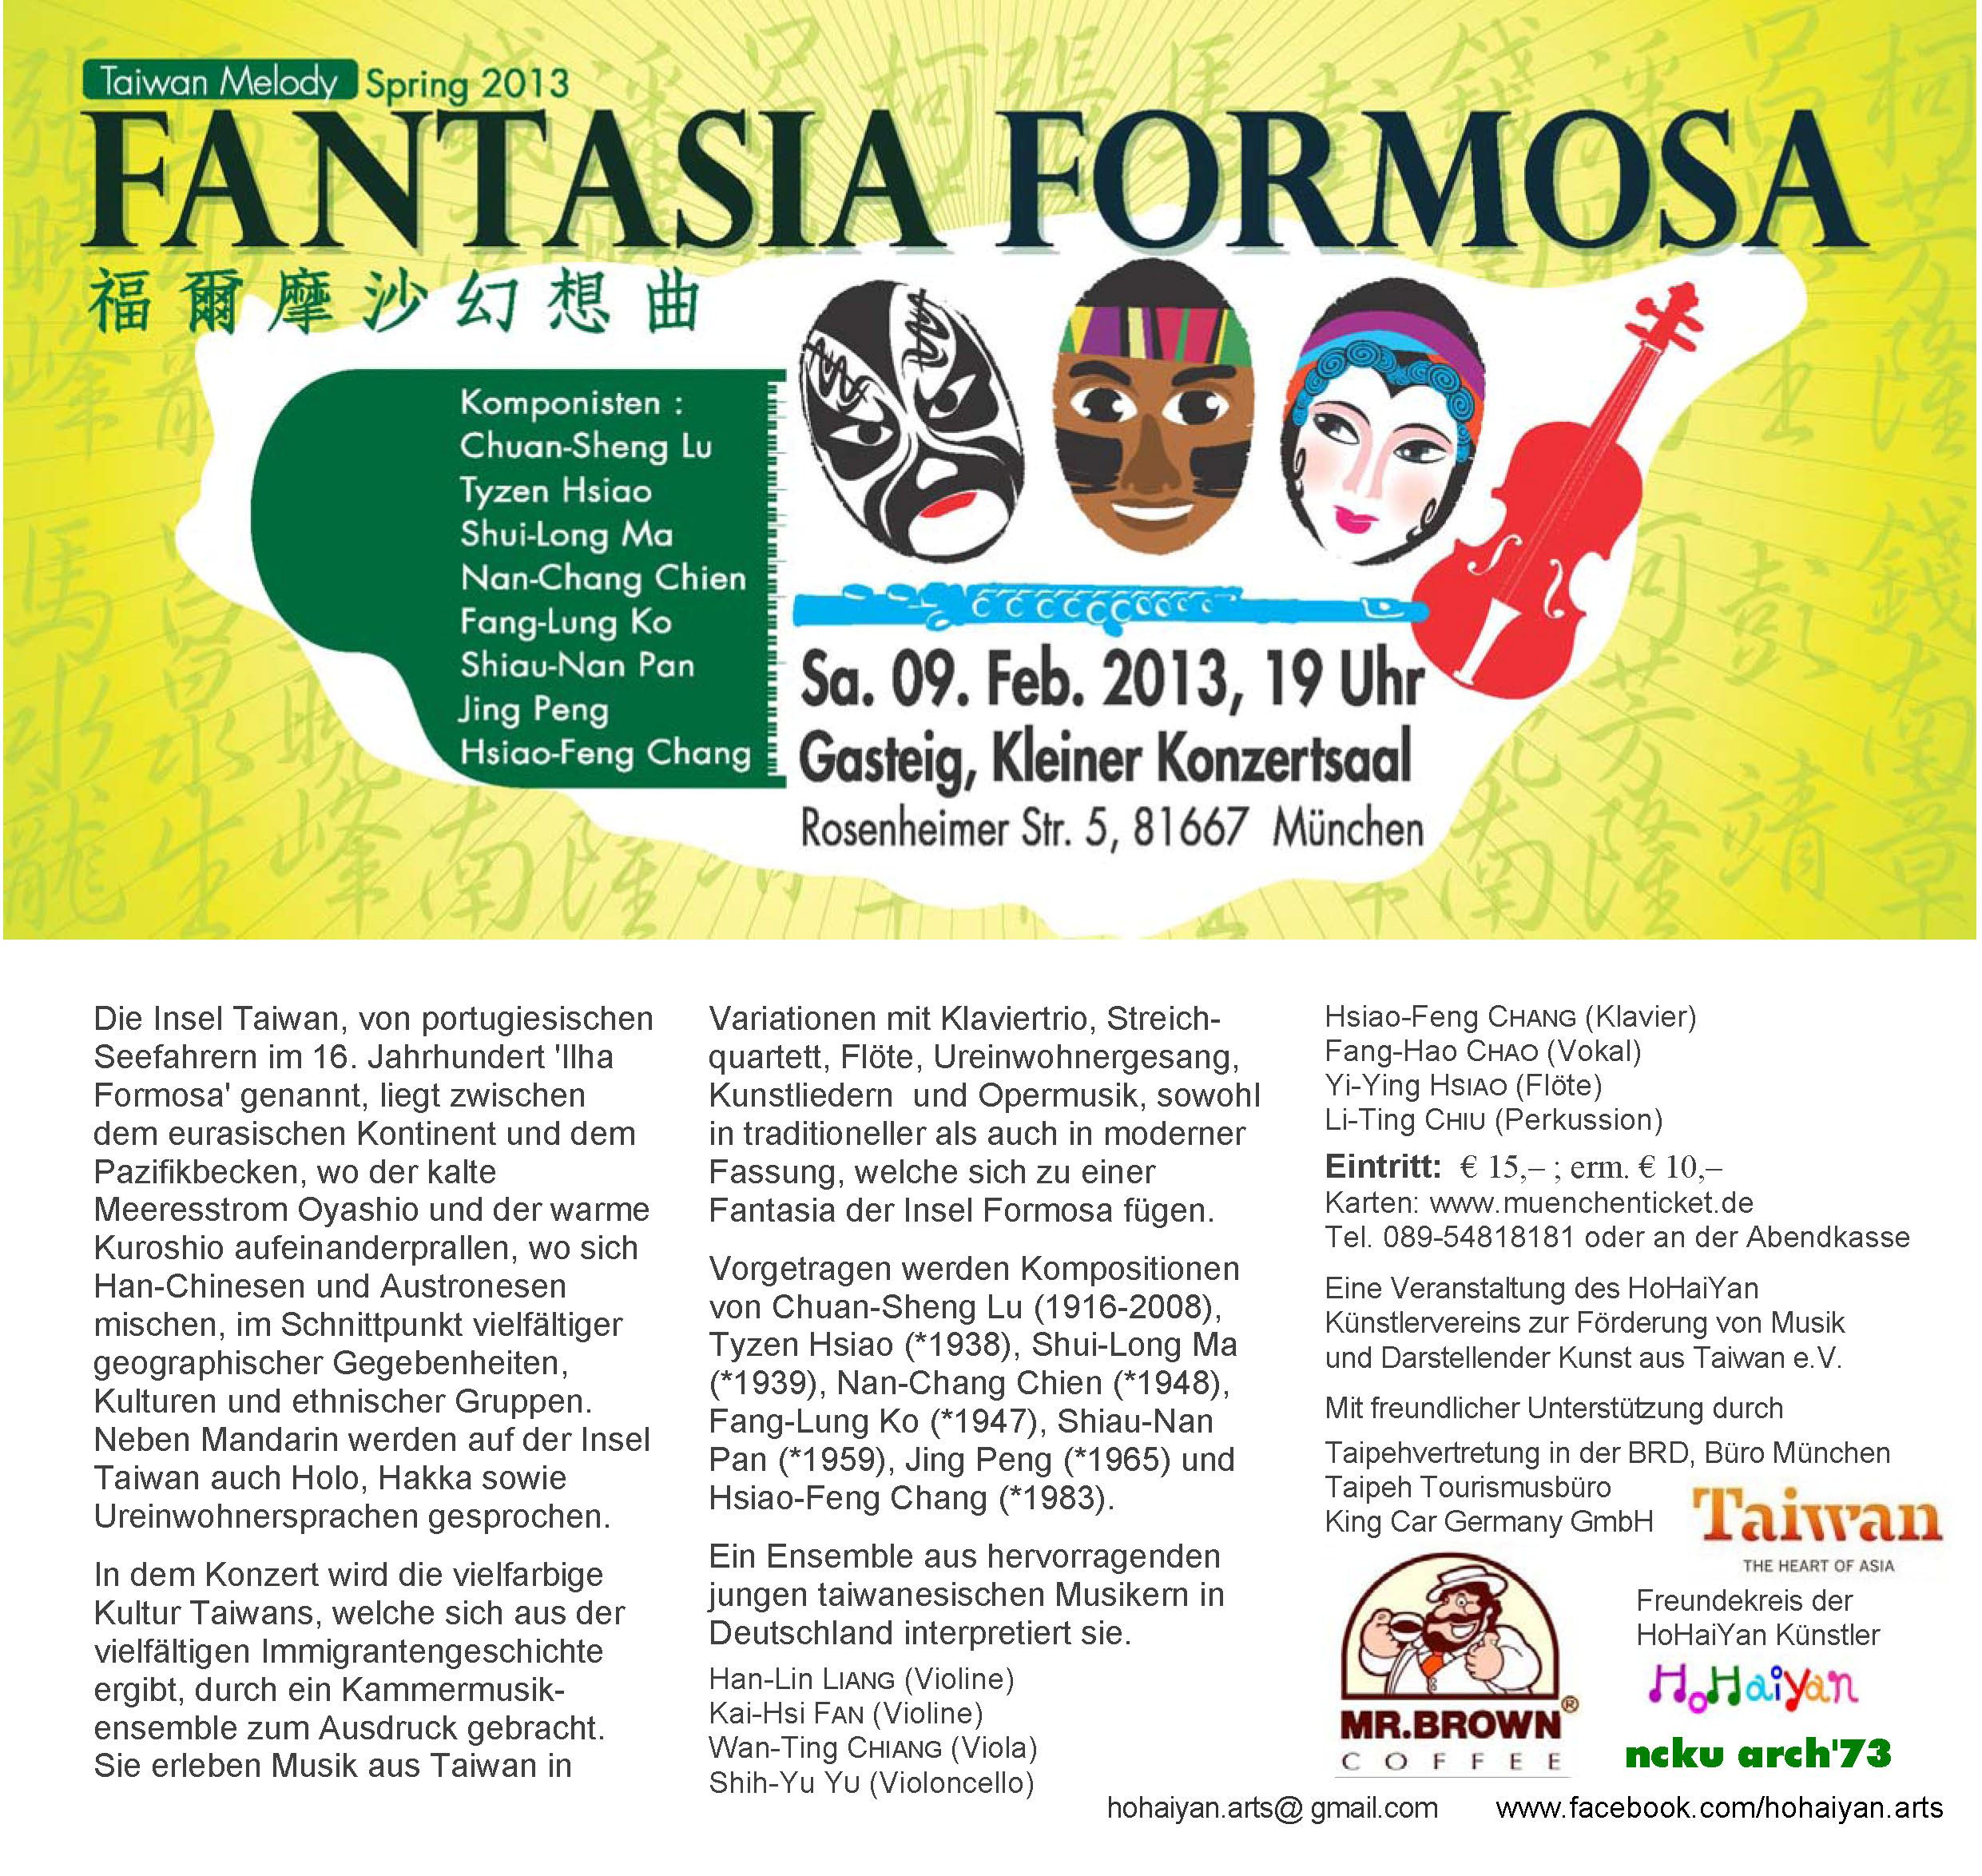 Fantasia Formosa München